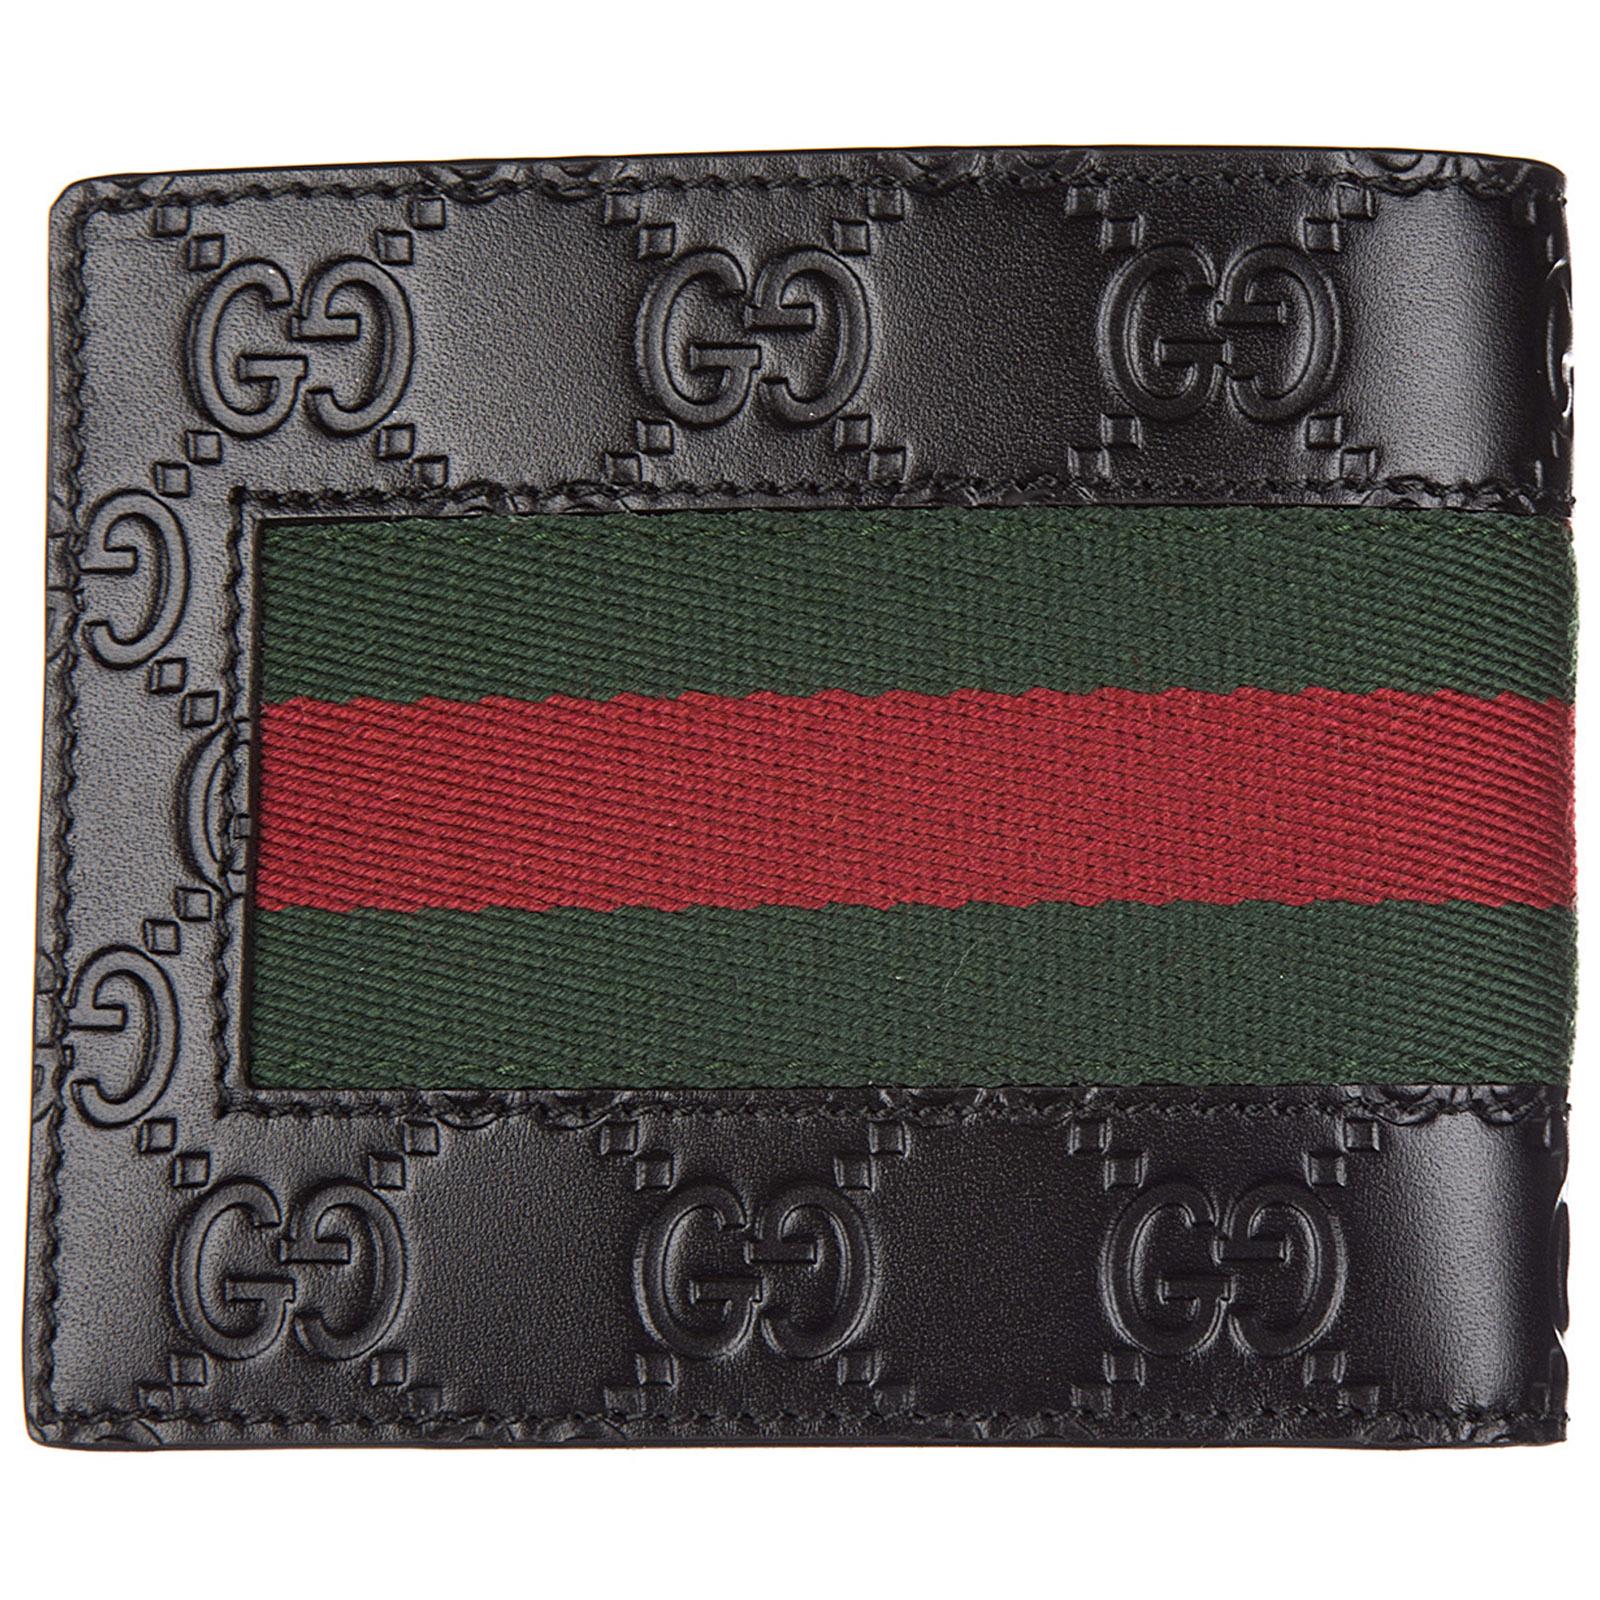 Gucci Men's Genuine Leather Wallet Credit Card Bifold Signature in Nero ...